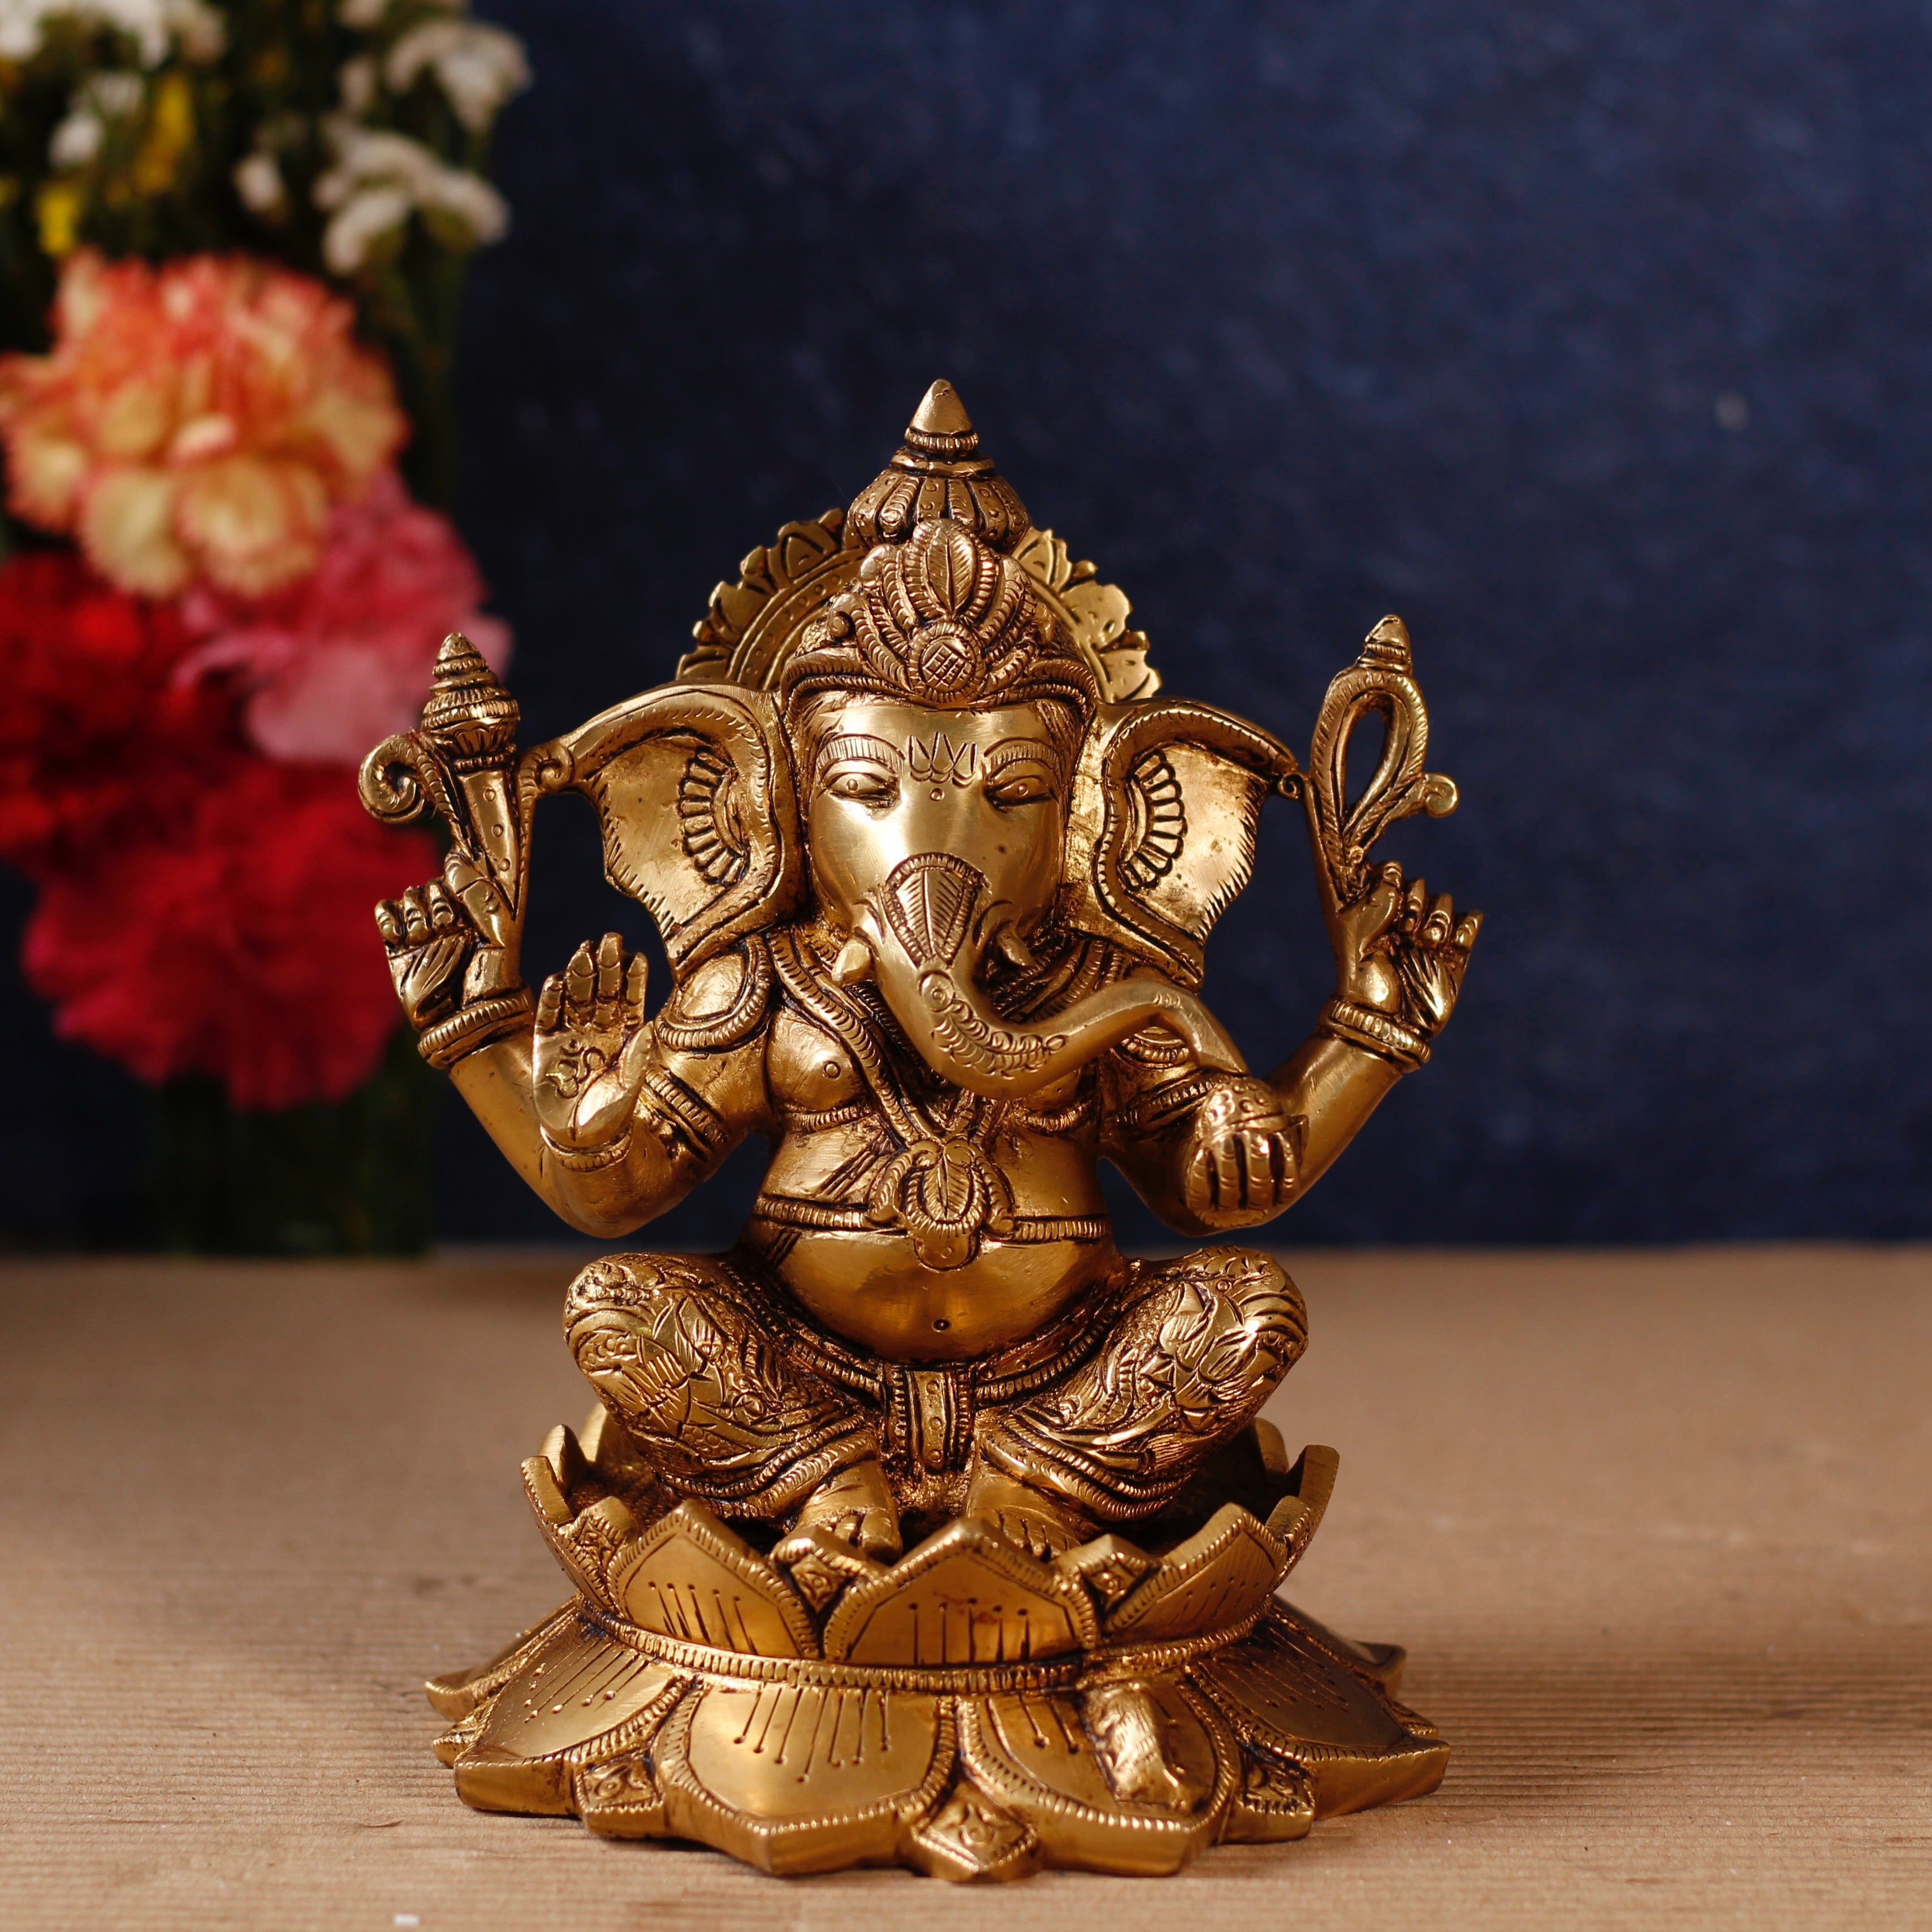 Lord Ganesha Sitting on Lotus